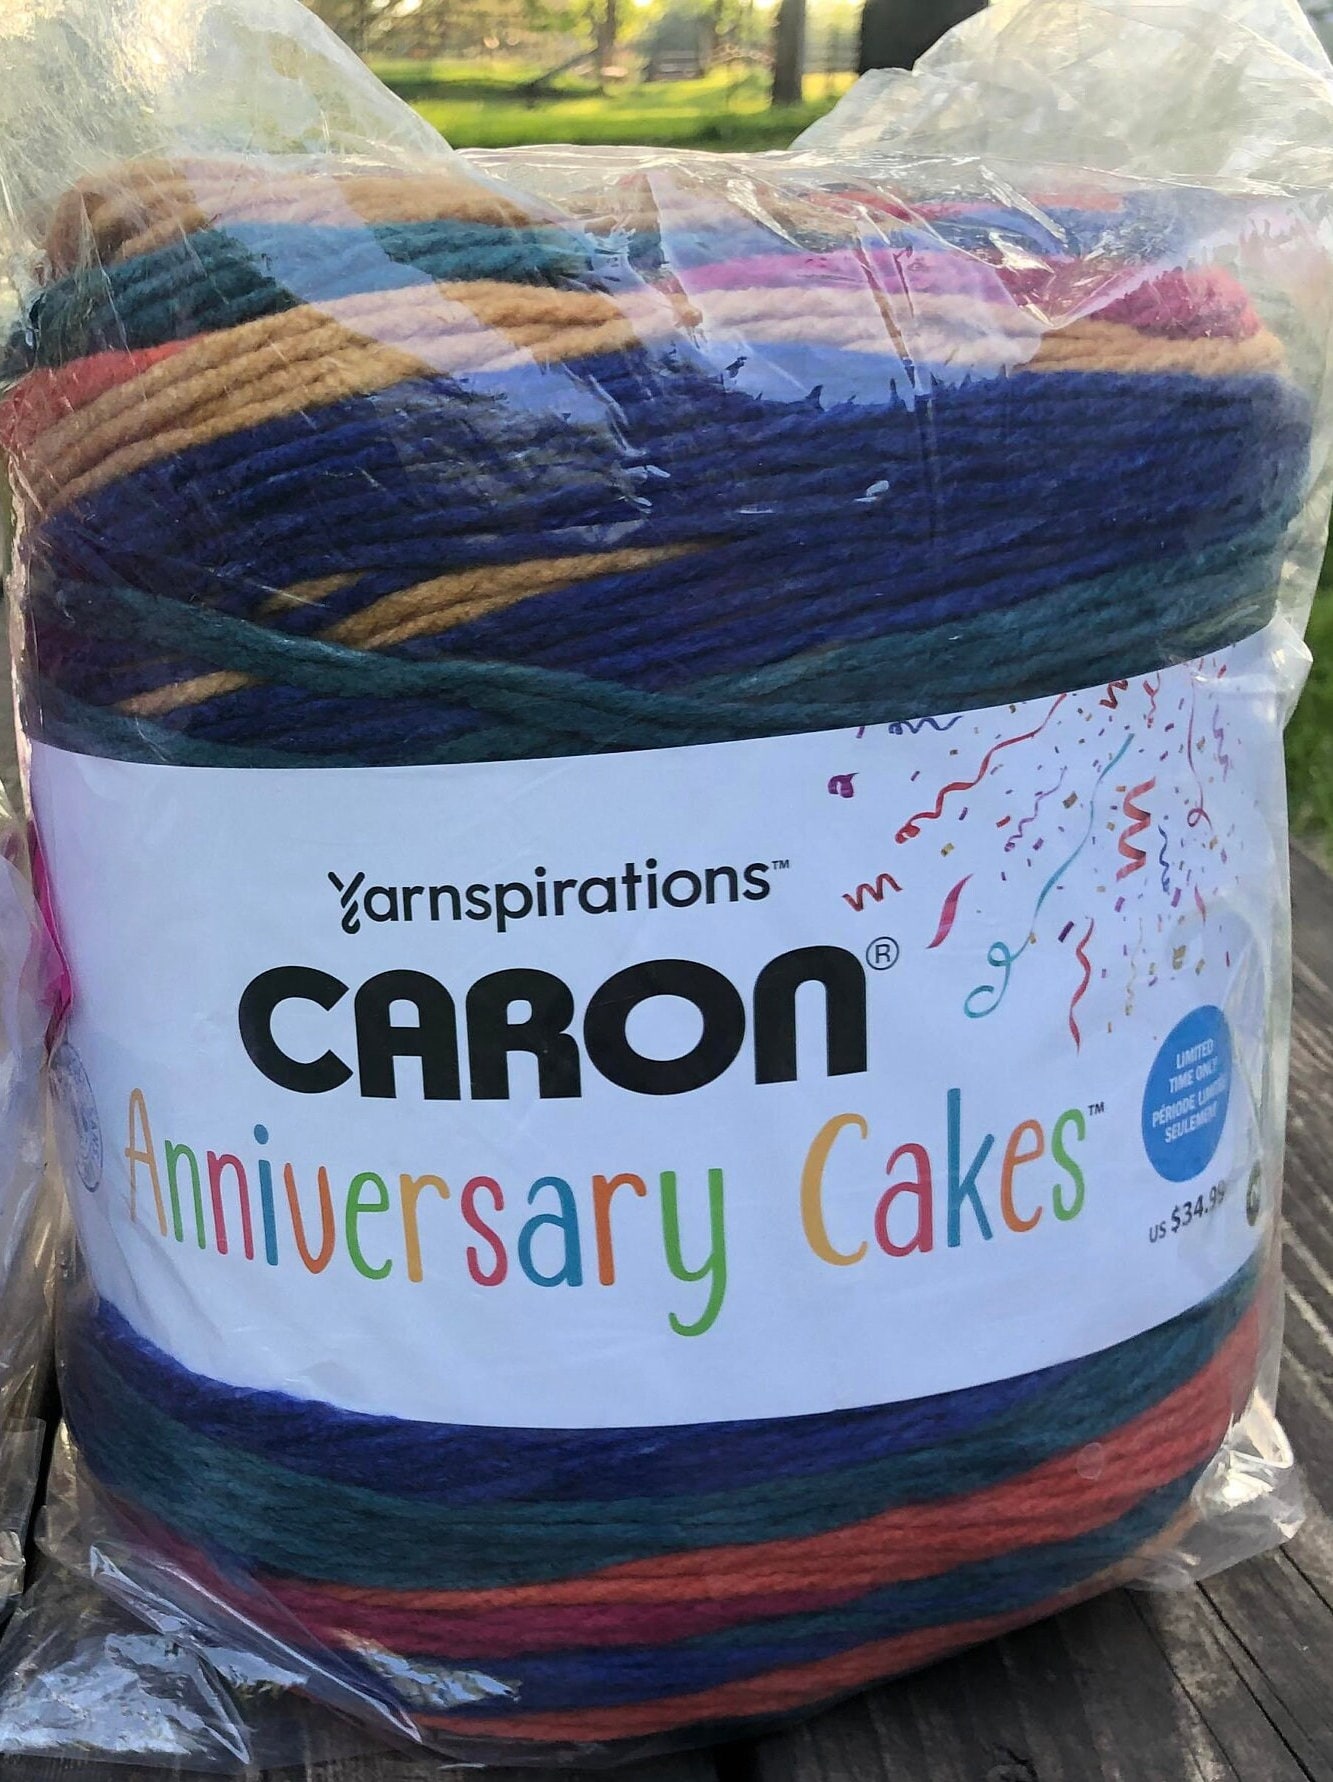 NEW PURPLE FOG Caron Anniversary Cakes, 1061 Yards, 35.3 Oz. 35.3